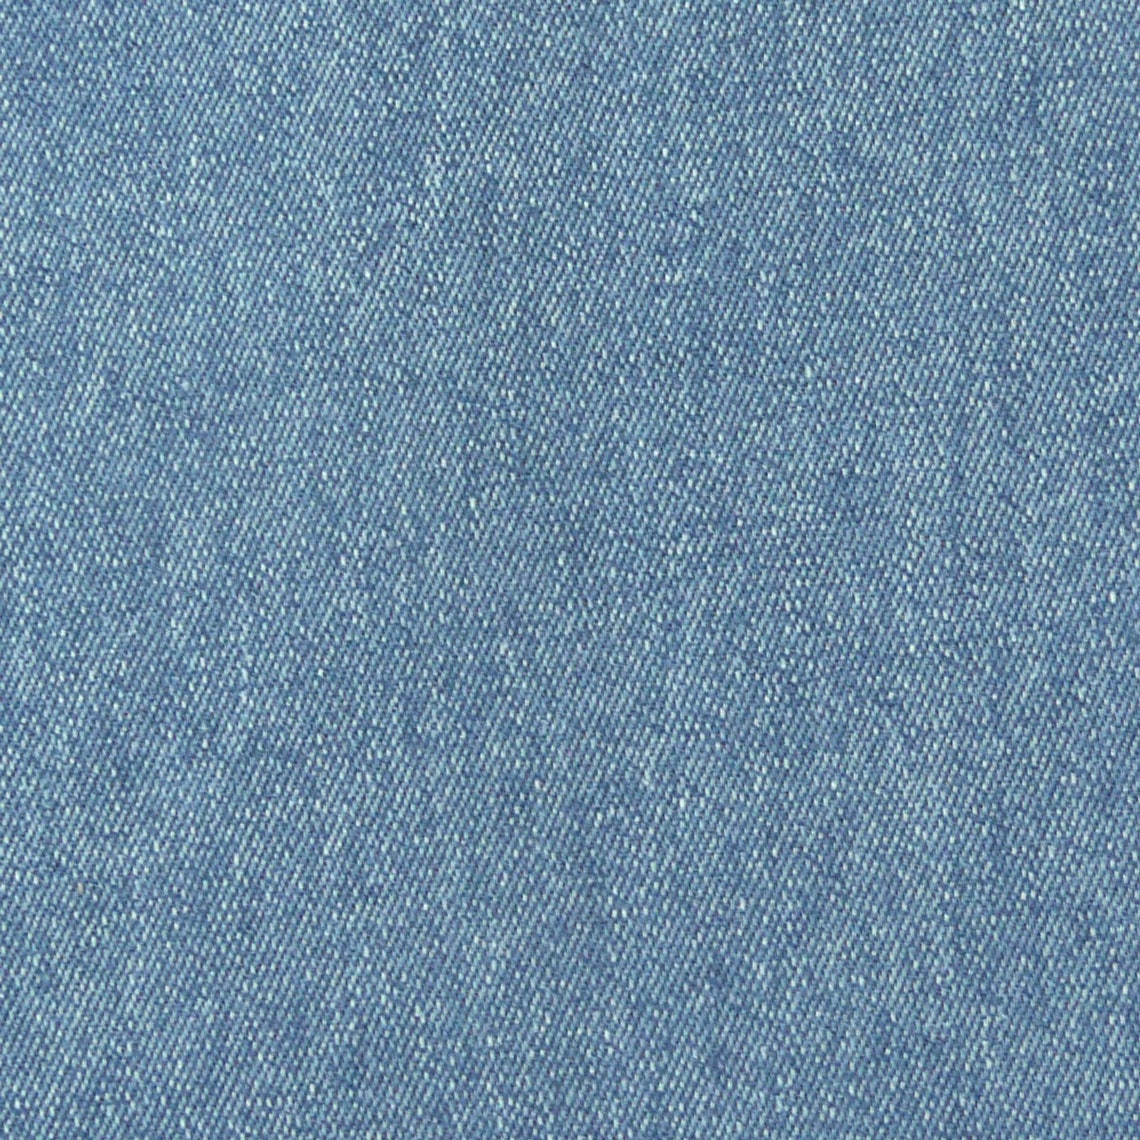 Denim Fabric Stretch Jeans 11OZ blue bleached | Etsy